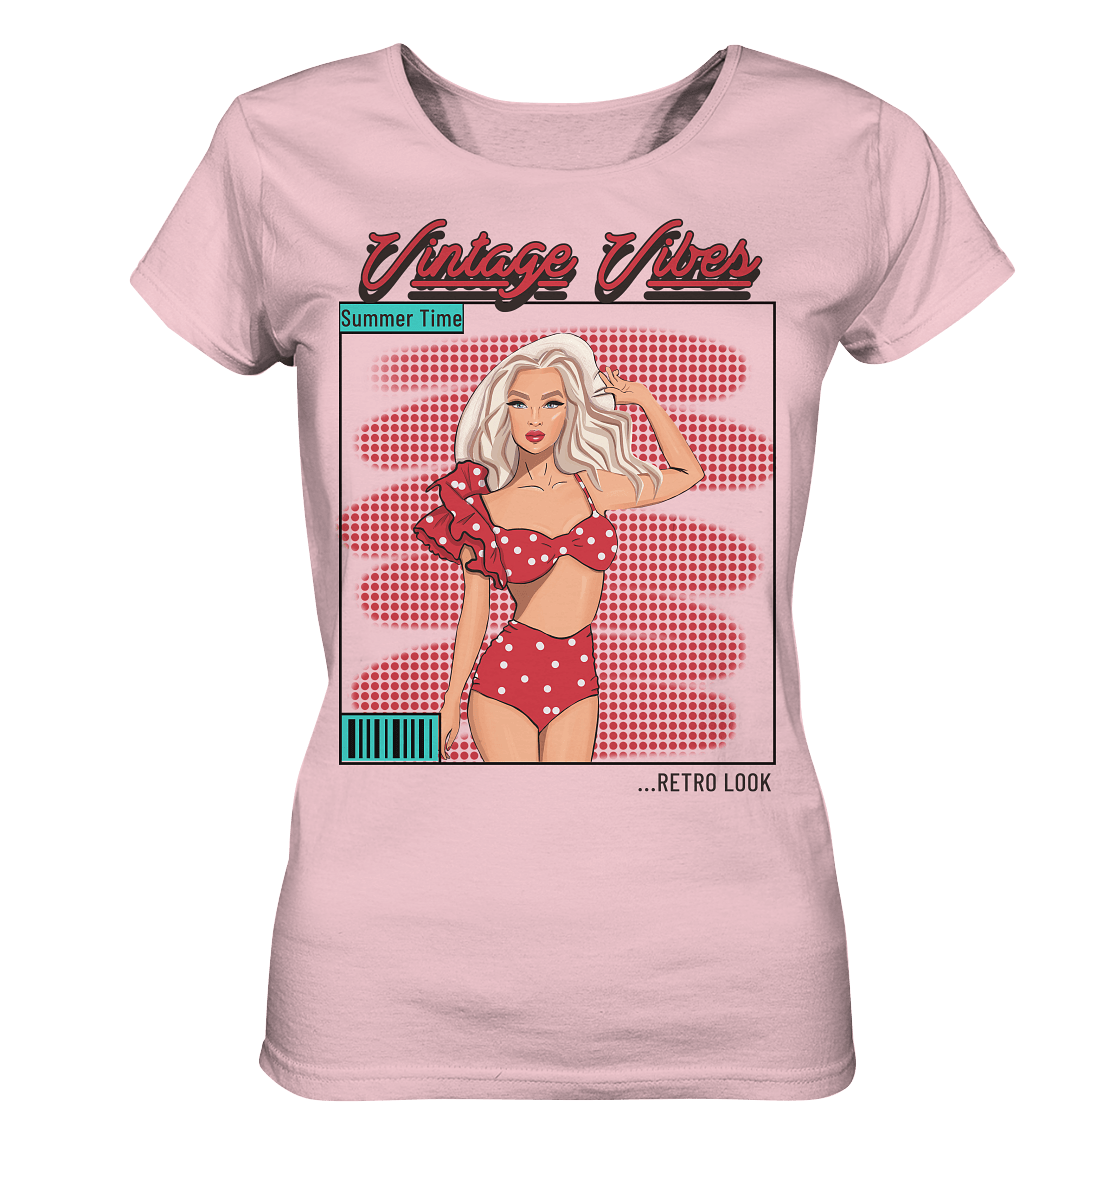 Retro Shirt Comic Pop Rockabilly Damen Shirt in rosa mit Polka Dots und Comic girl Vintage Vibes Shirt